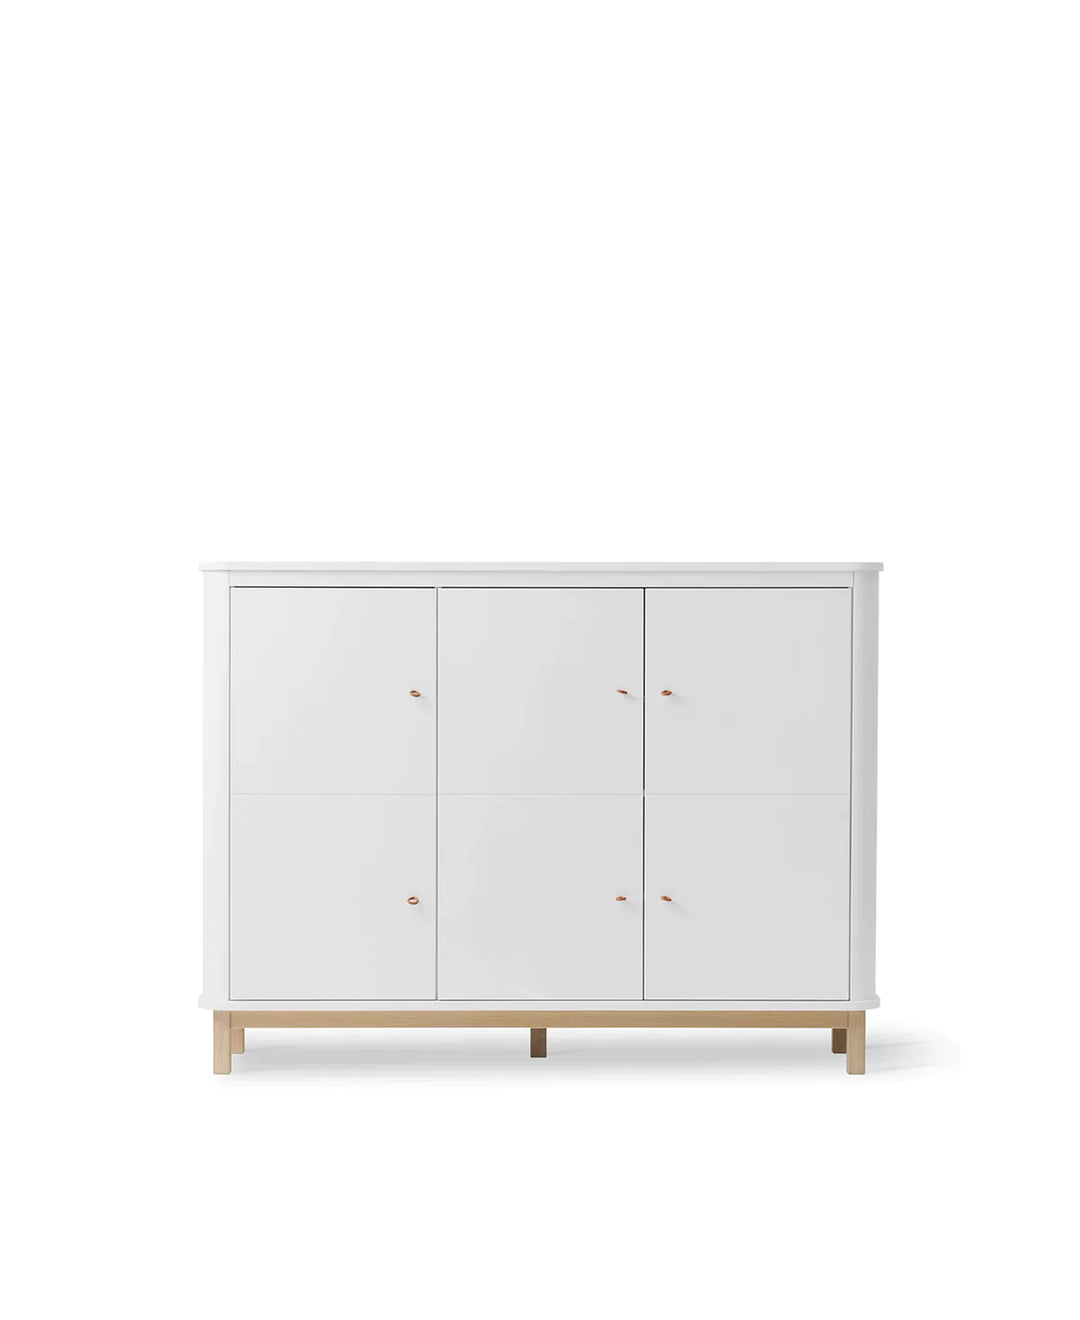 Oliver Furniture Wood Multi Cupboard in wit en eik met drie deuren, uitgerust met smalle en brede planken en geïntegreerde haken.